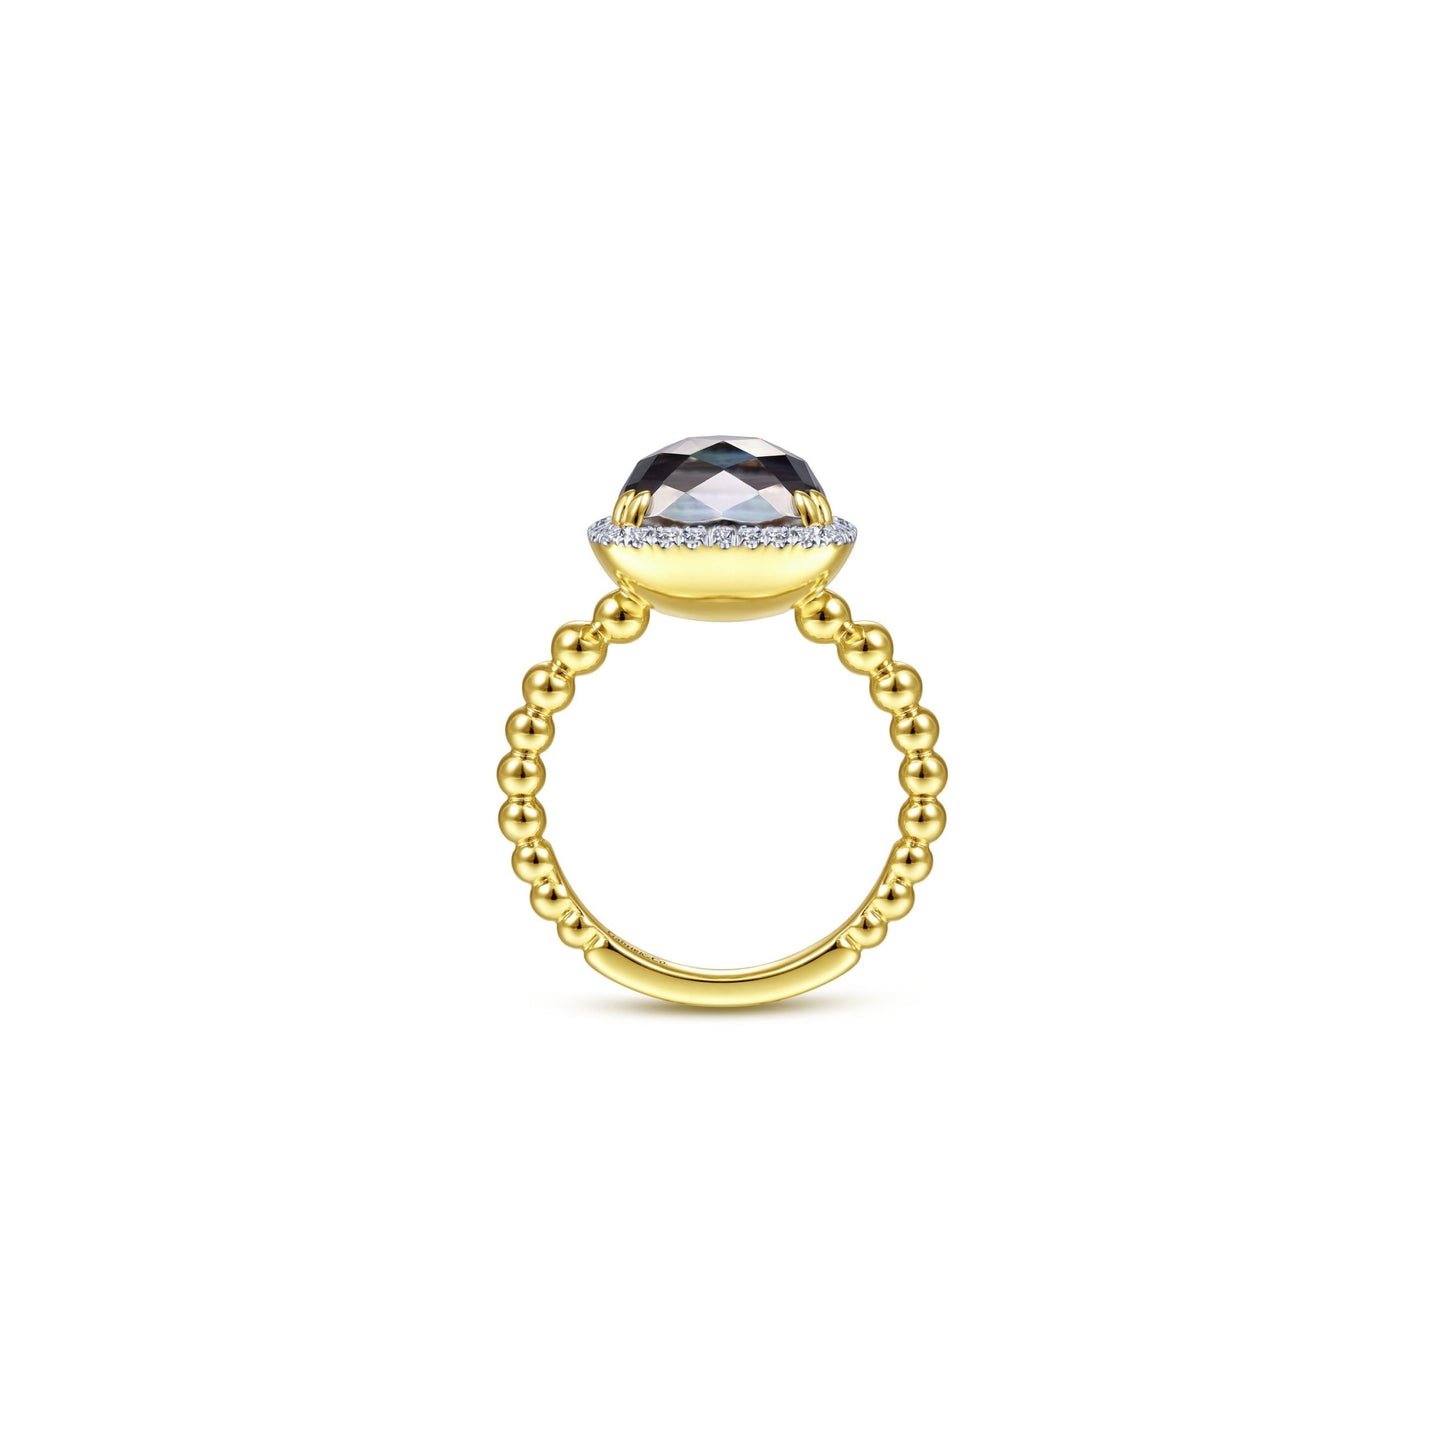 14K Yellow Gold Cushion Cut Rock Crystal/Black Pearl and Diamond Halo Ring